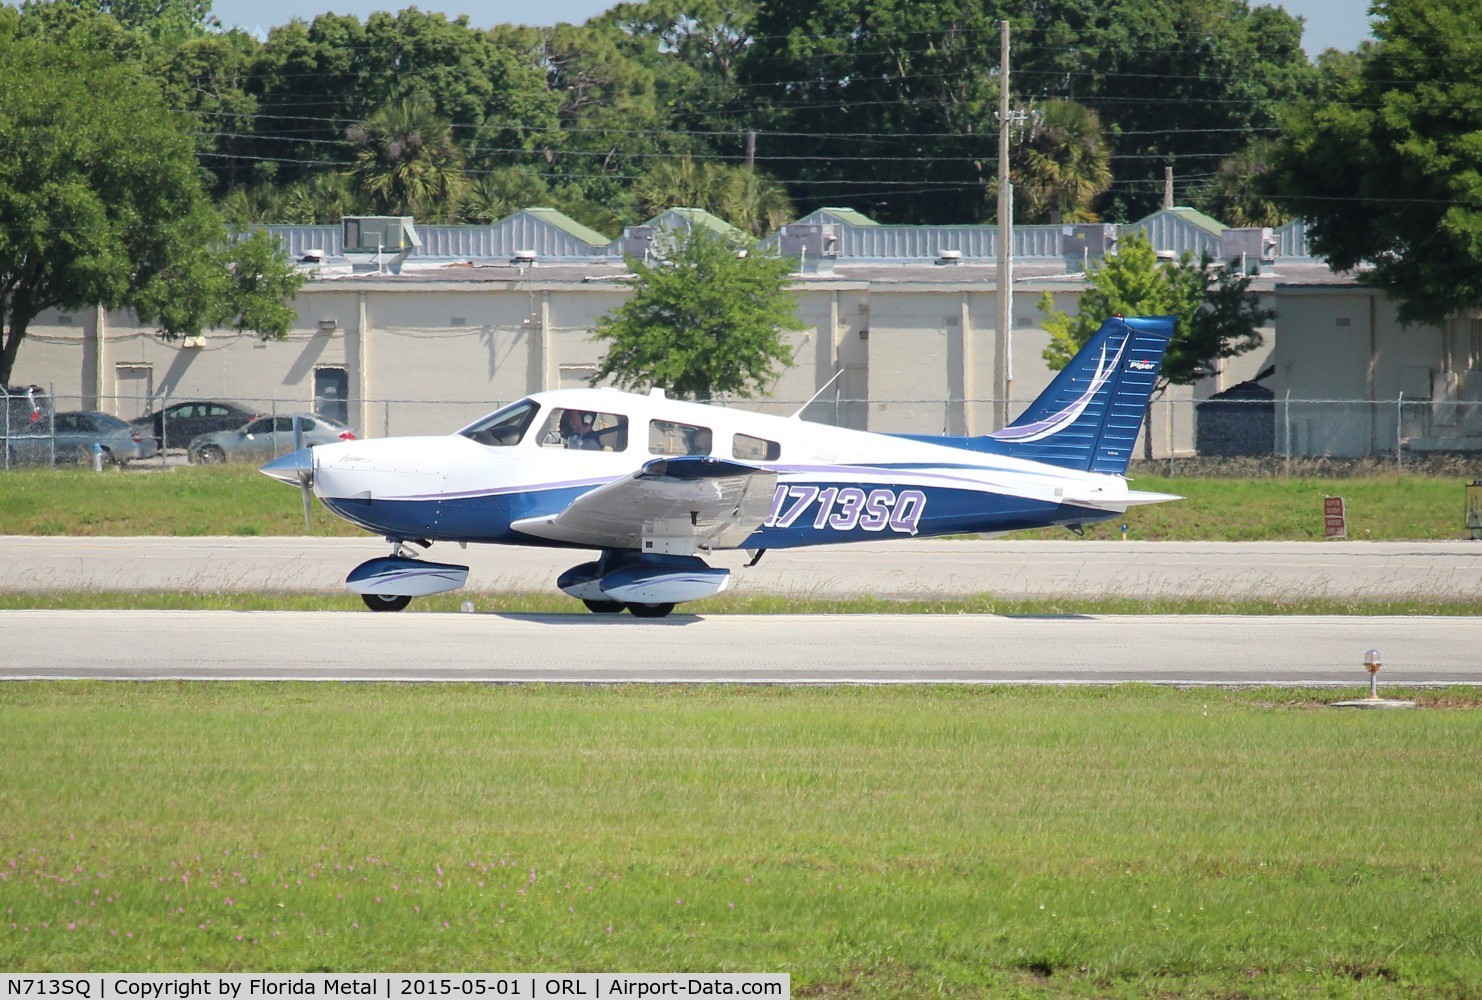 N713SQ, 2013 Piper PA-28-181 C/N 2843735, PA-28-181